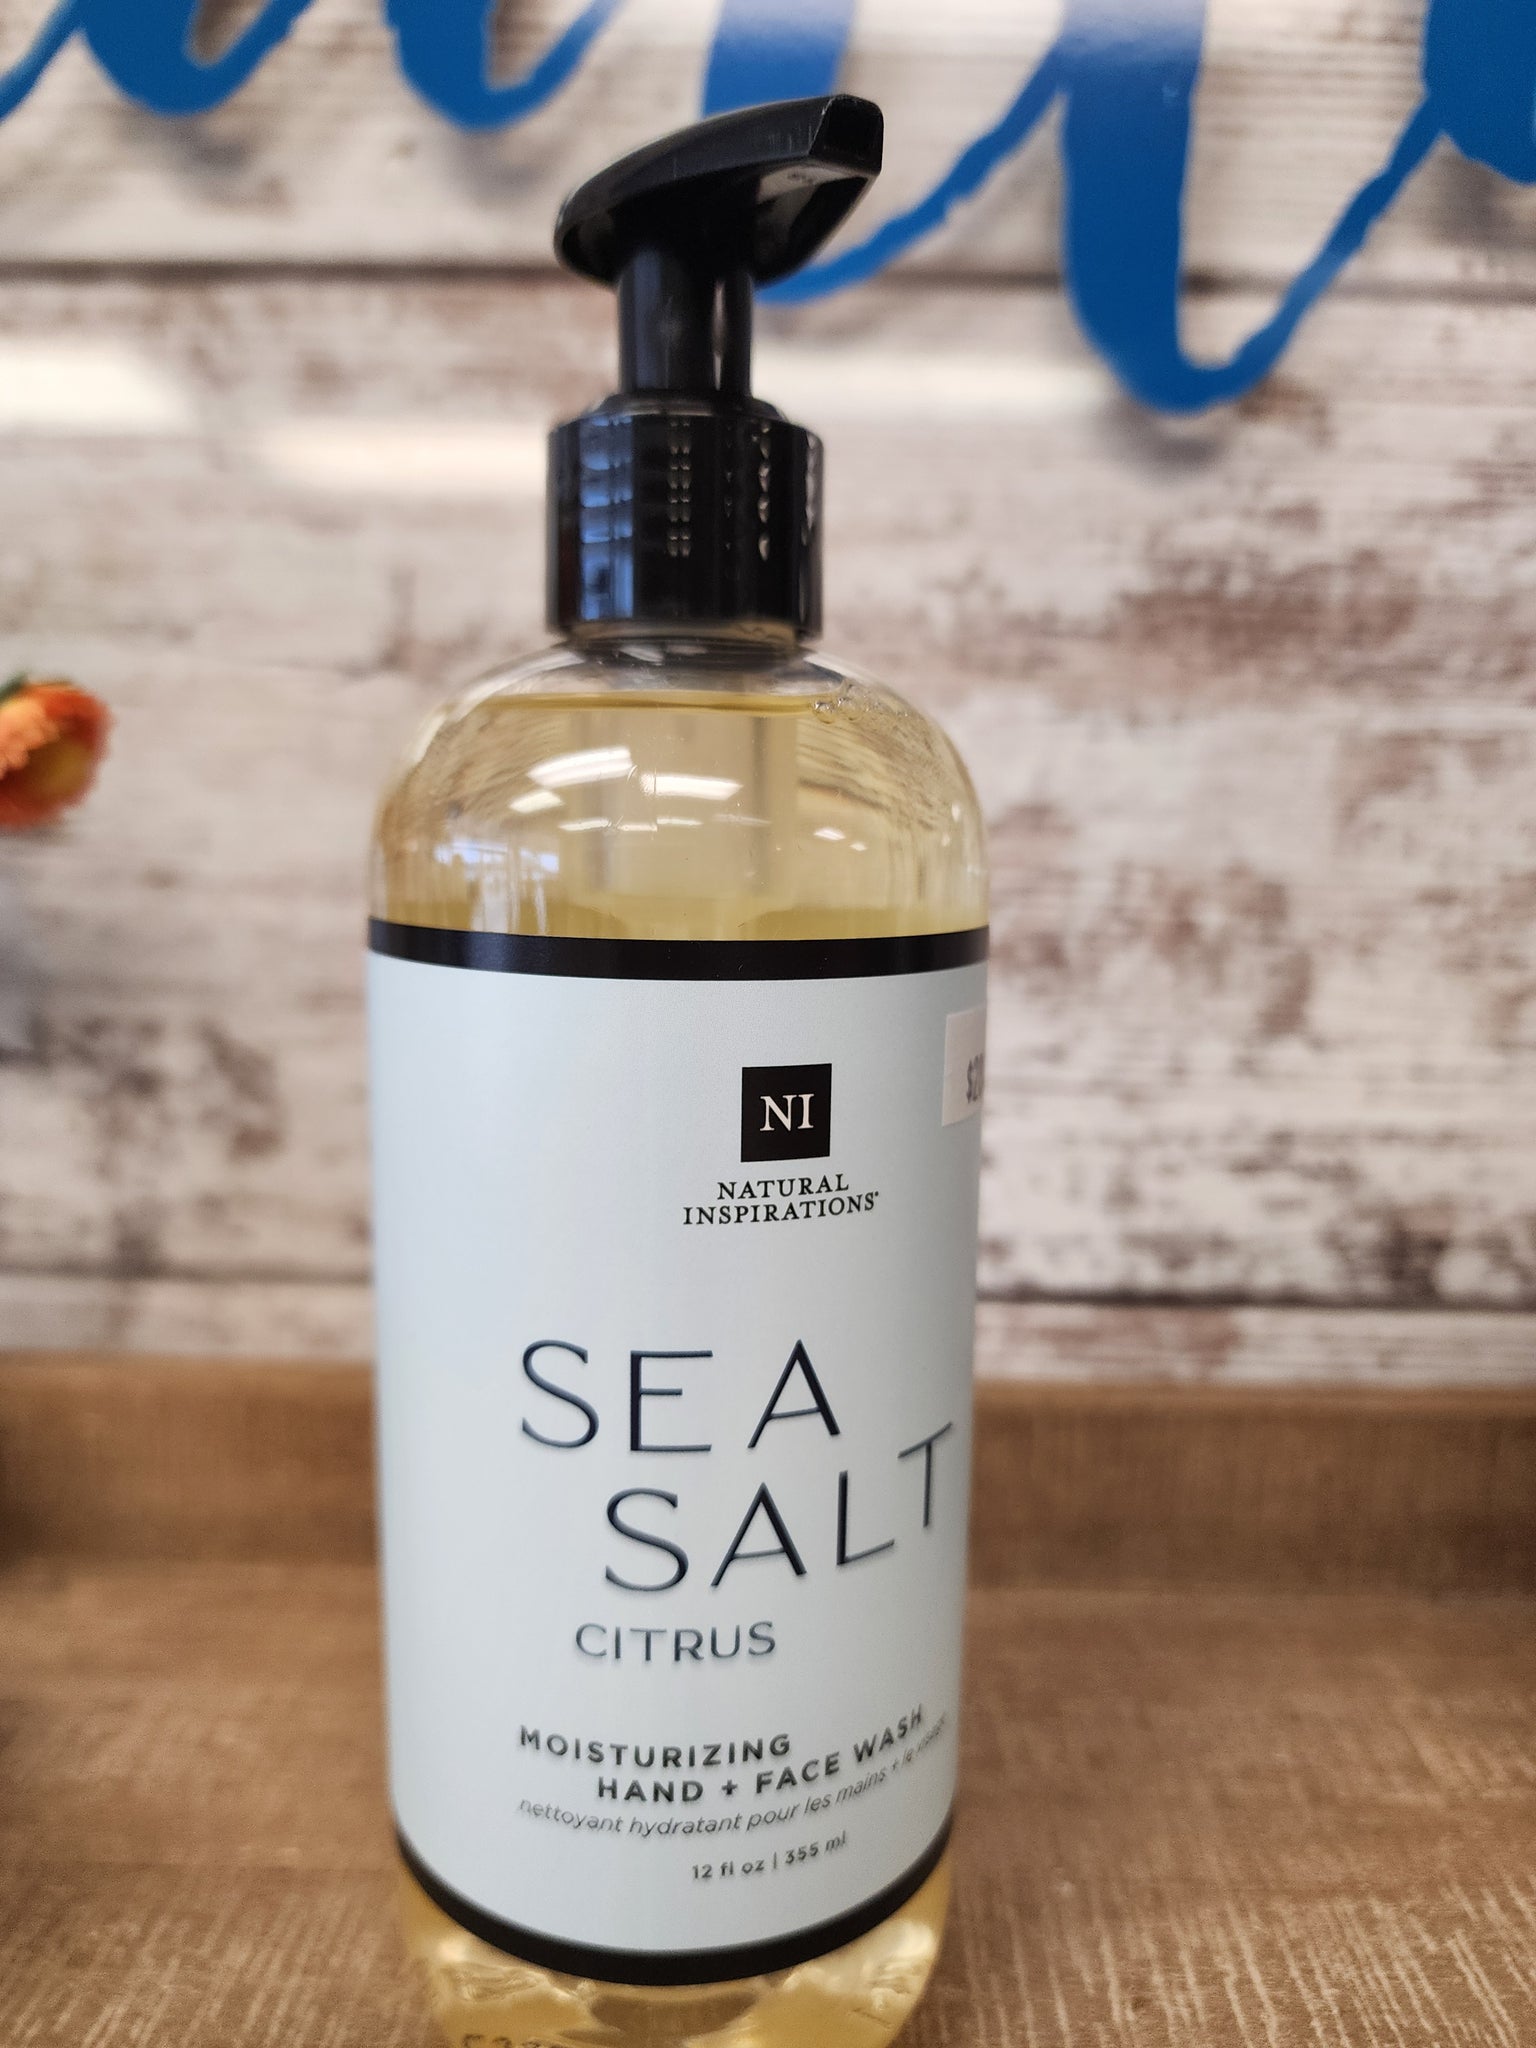 Sea salt citrus moisturizing hand and face wash